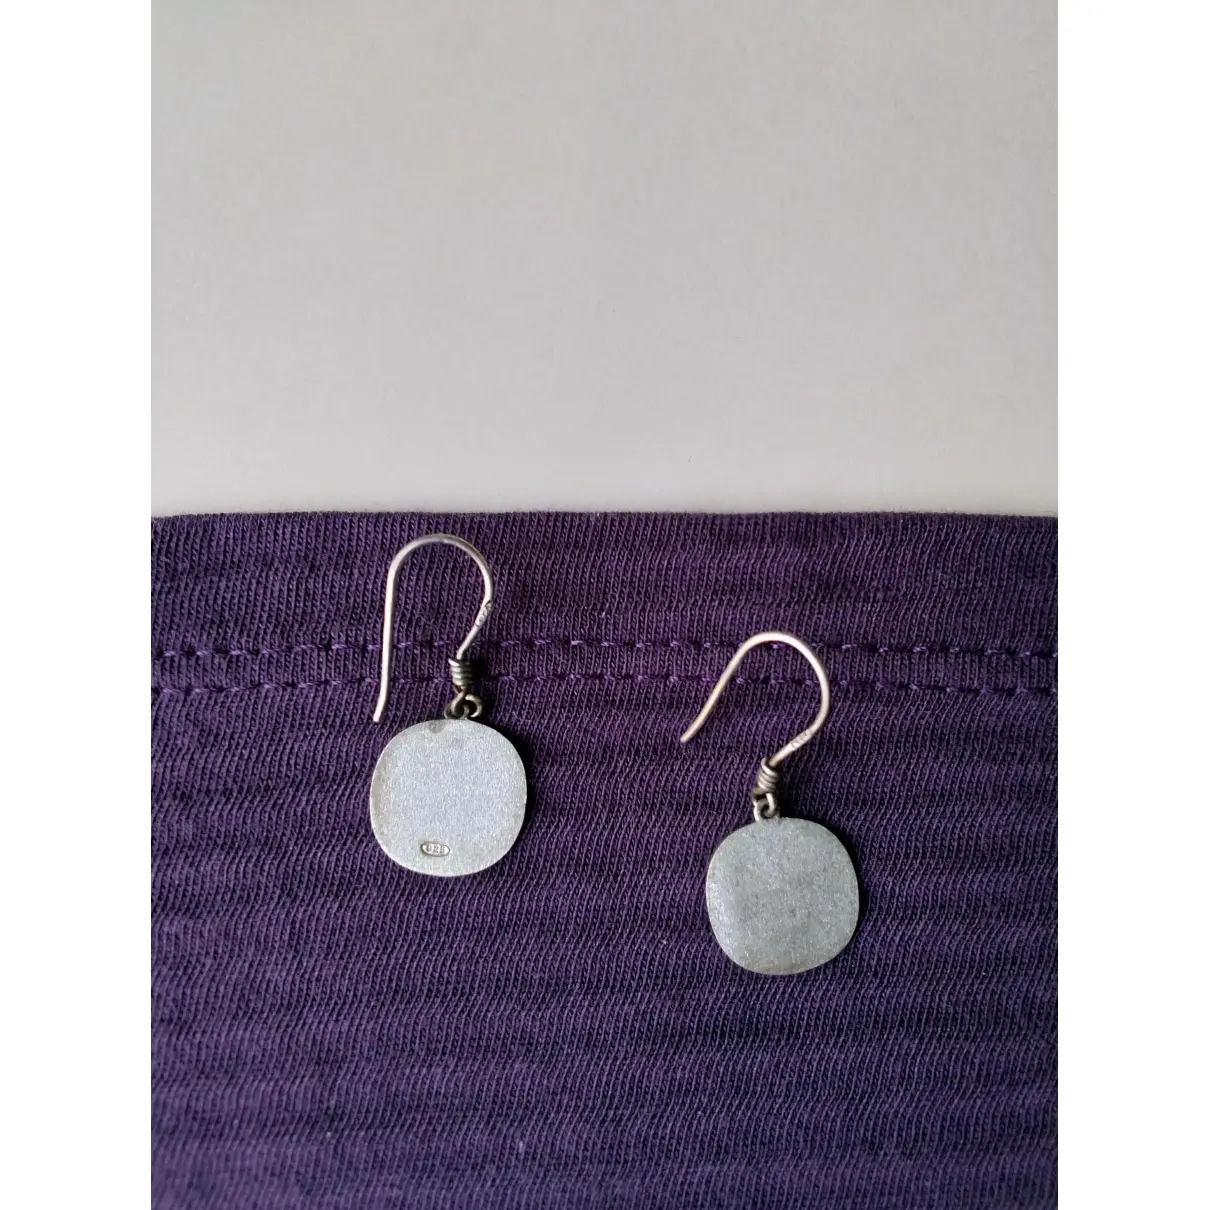 Haga Silver earrings for sale